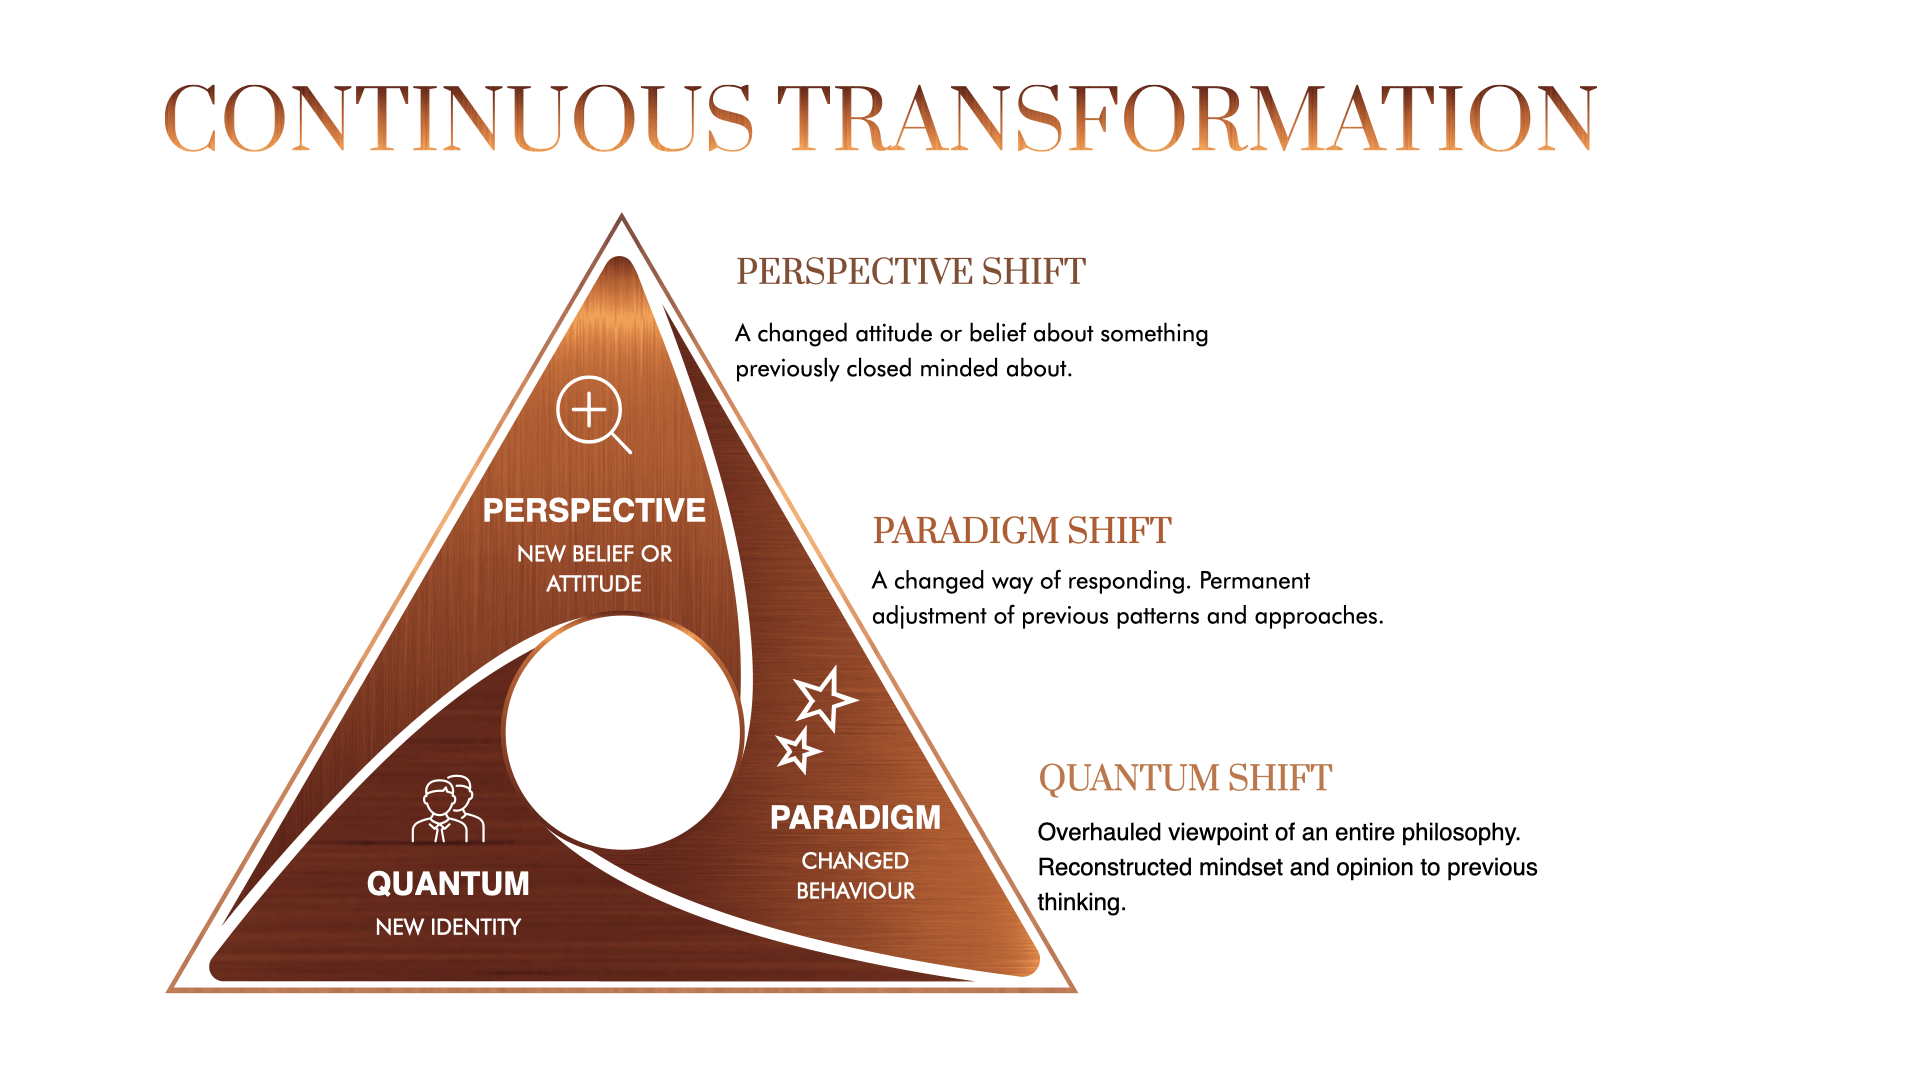 Continuous Transformation, Perspective Shift, Paradigm Shift, Quantum Shift